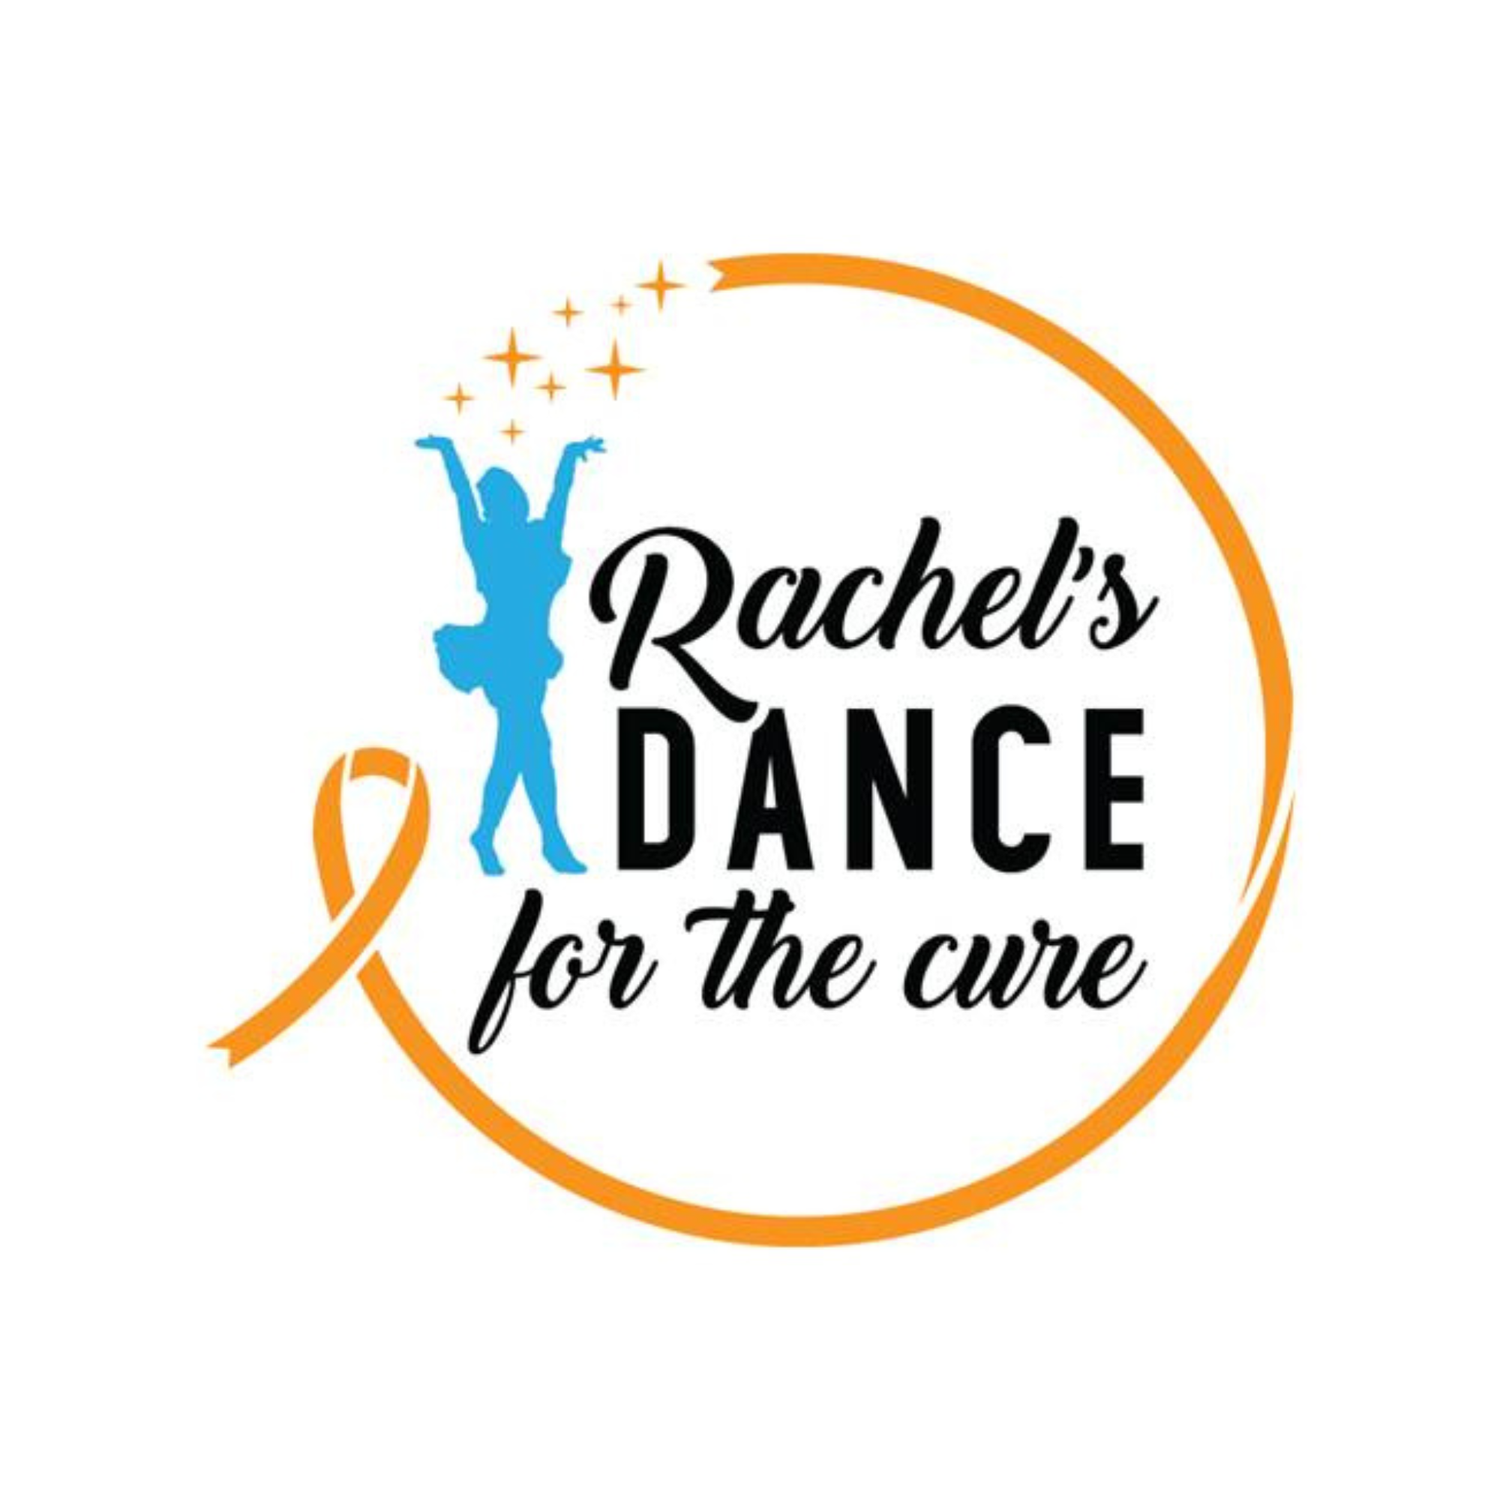 Rachel's Dance For the Cure